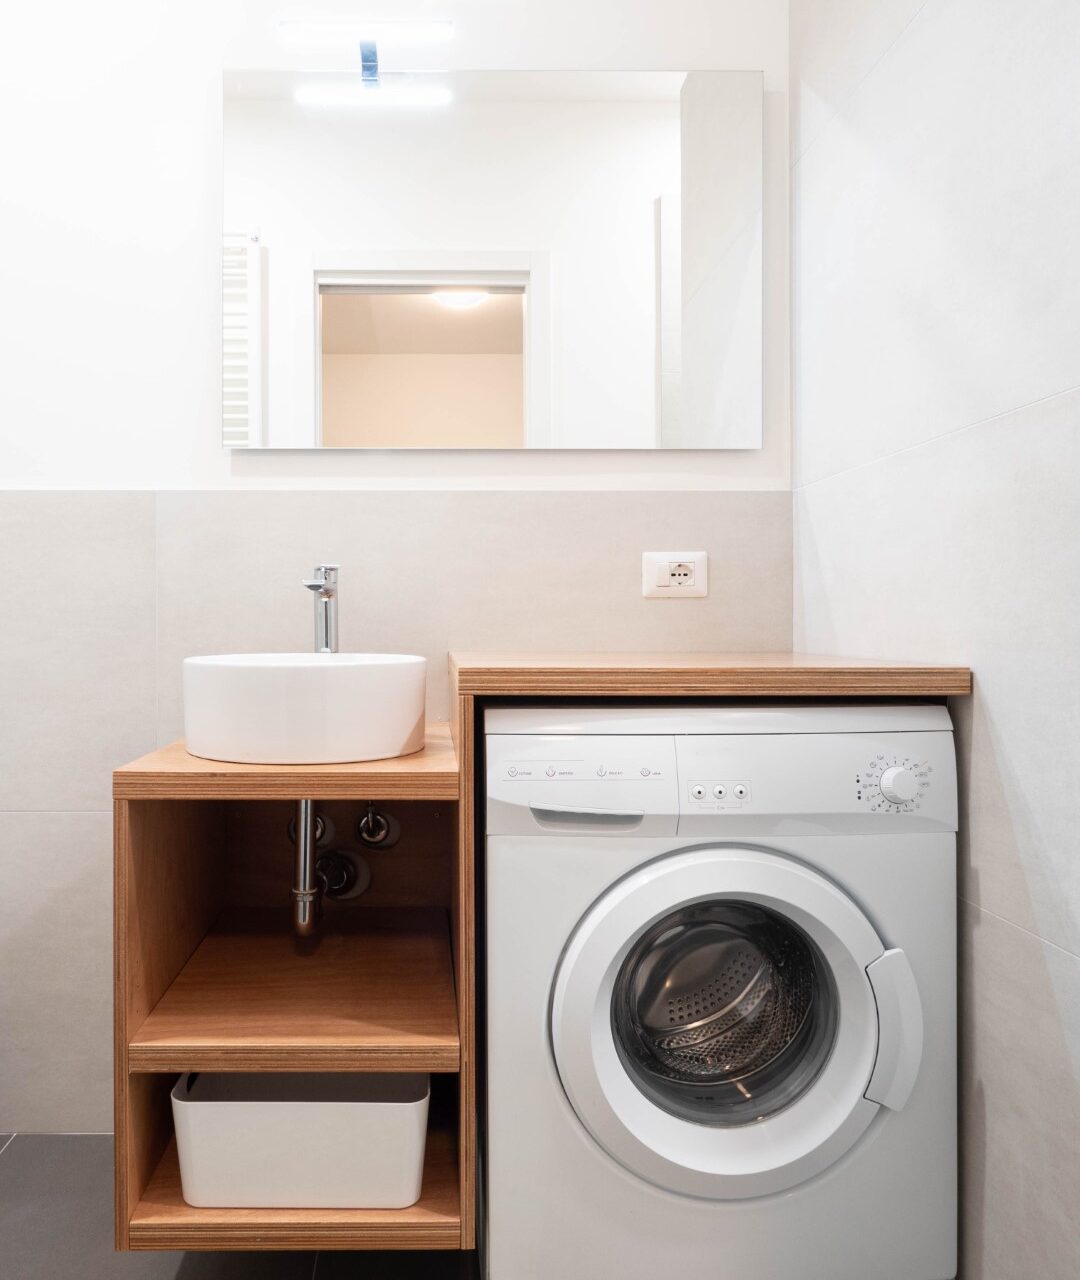 Modern Laundry Room With Washing Machine Small Ba 2023 01 04 00 43 56 Utc